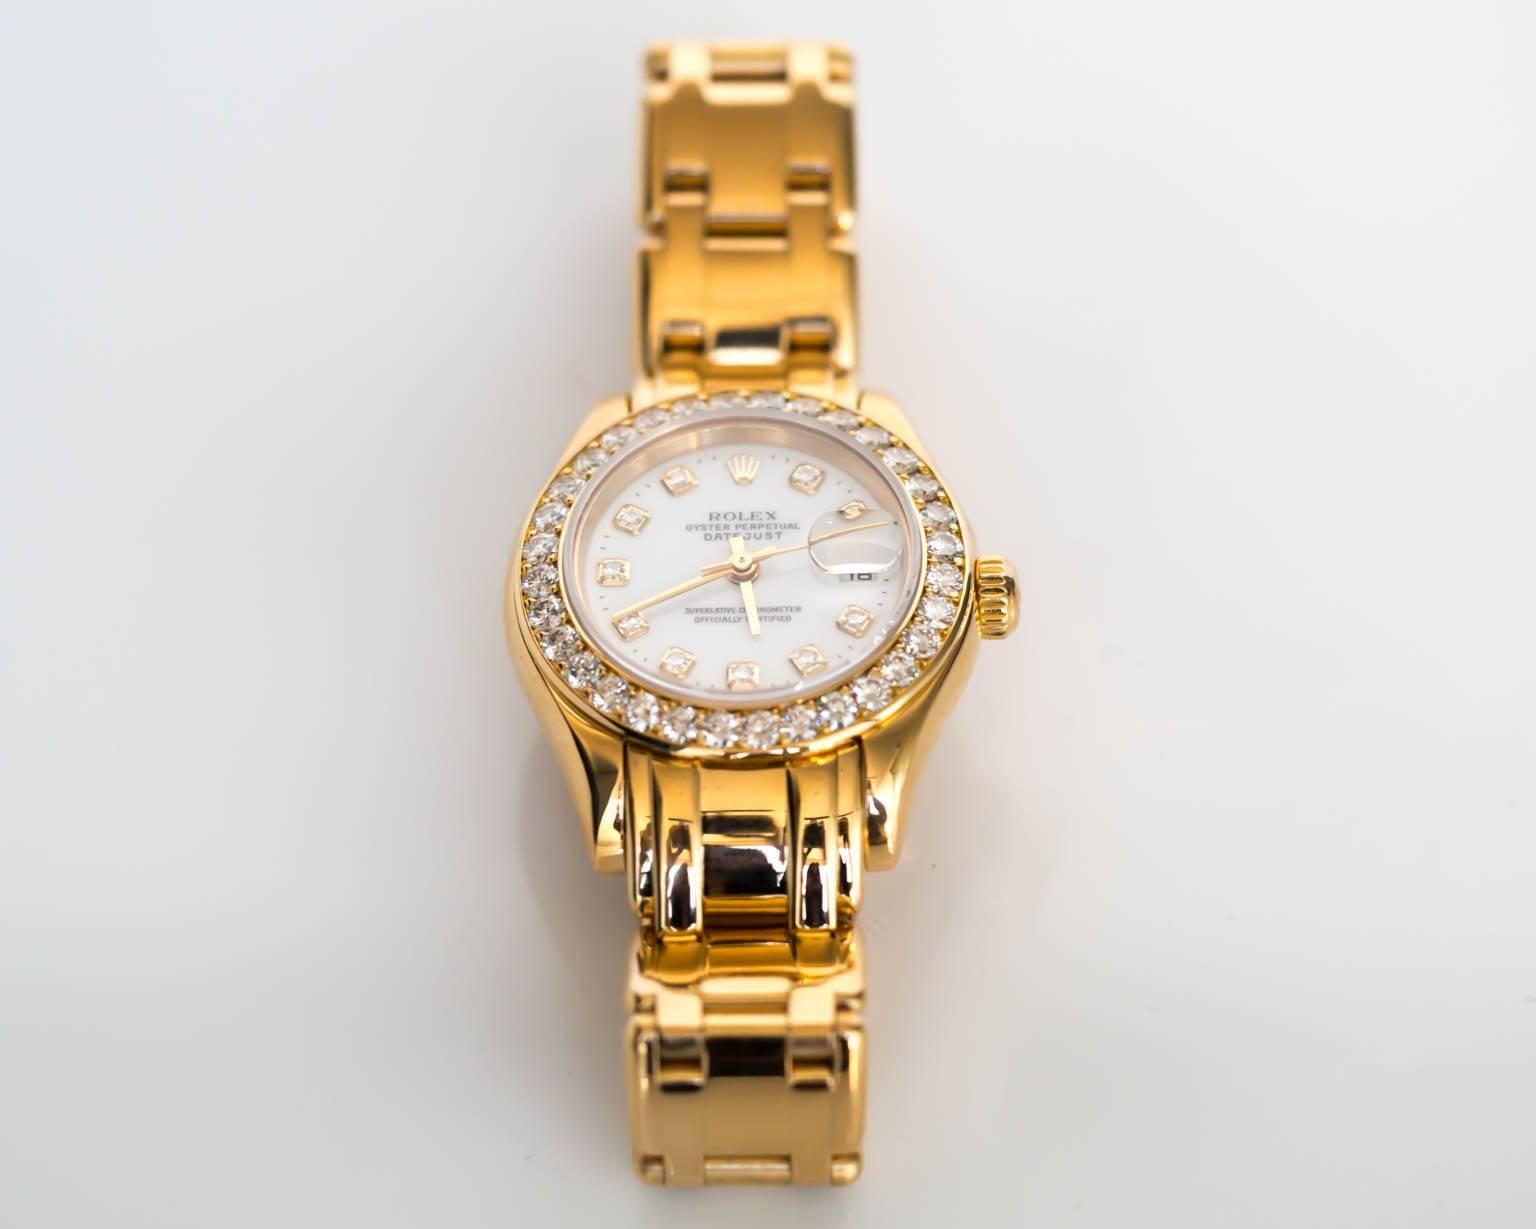 2000s 18 Karat Yellow Gold Ladies Masterpiece Factory Diamond Bezel & Factory Diamond Dial Rolex Watch 80298

Item Details: 
Metal Type: 18 Karat Yellow Gold
Weight: 103.2 grams
Diameter: 29mm